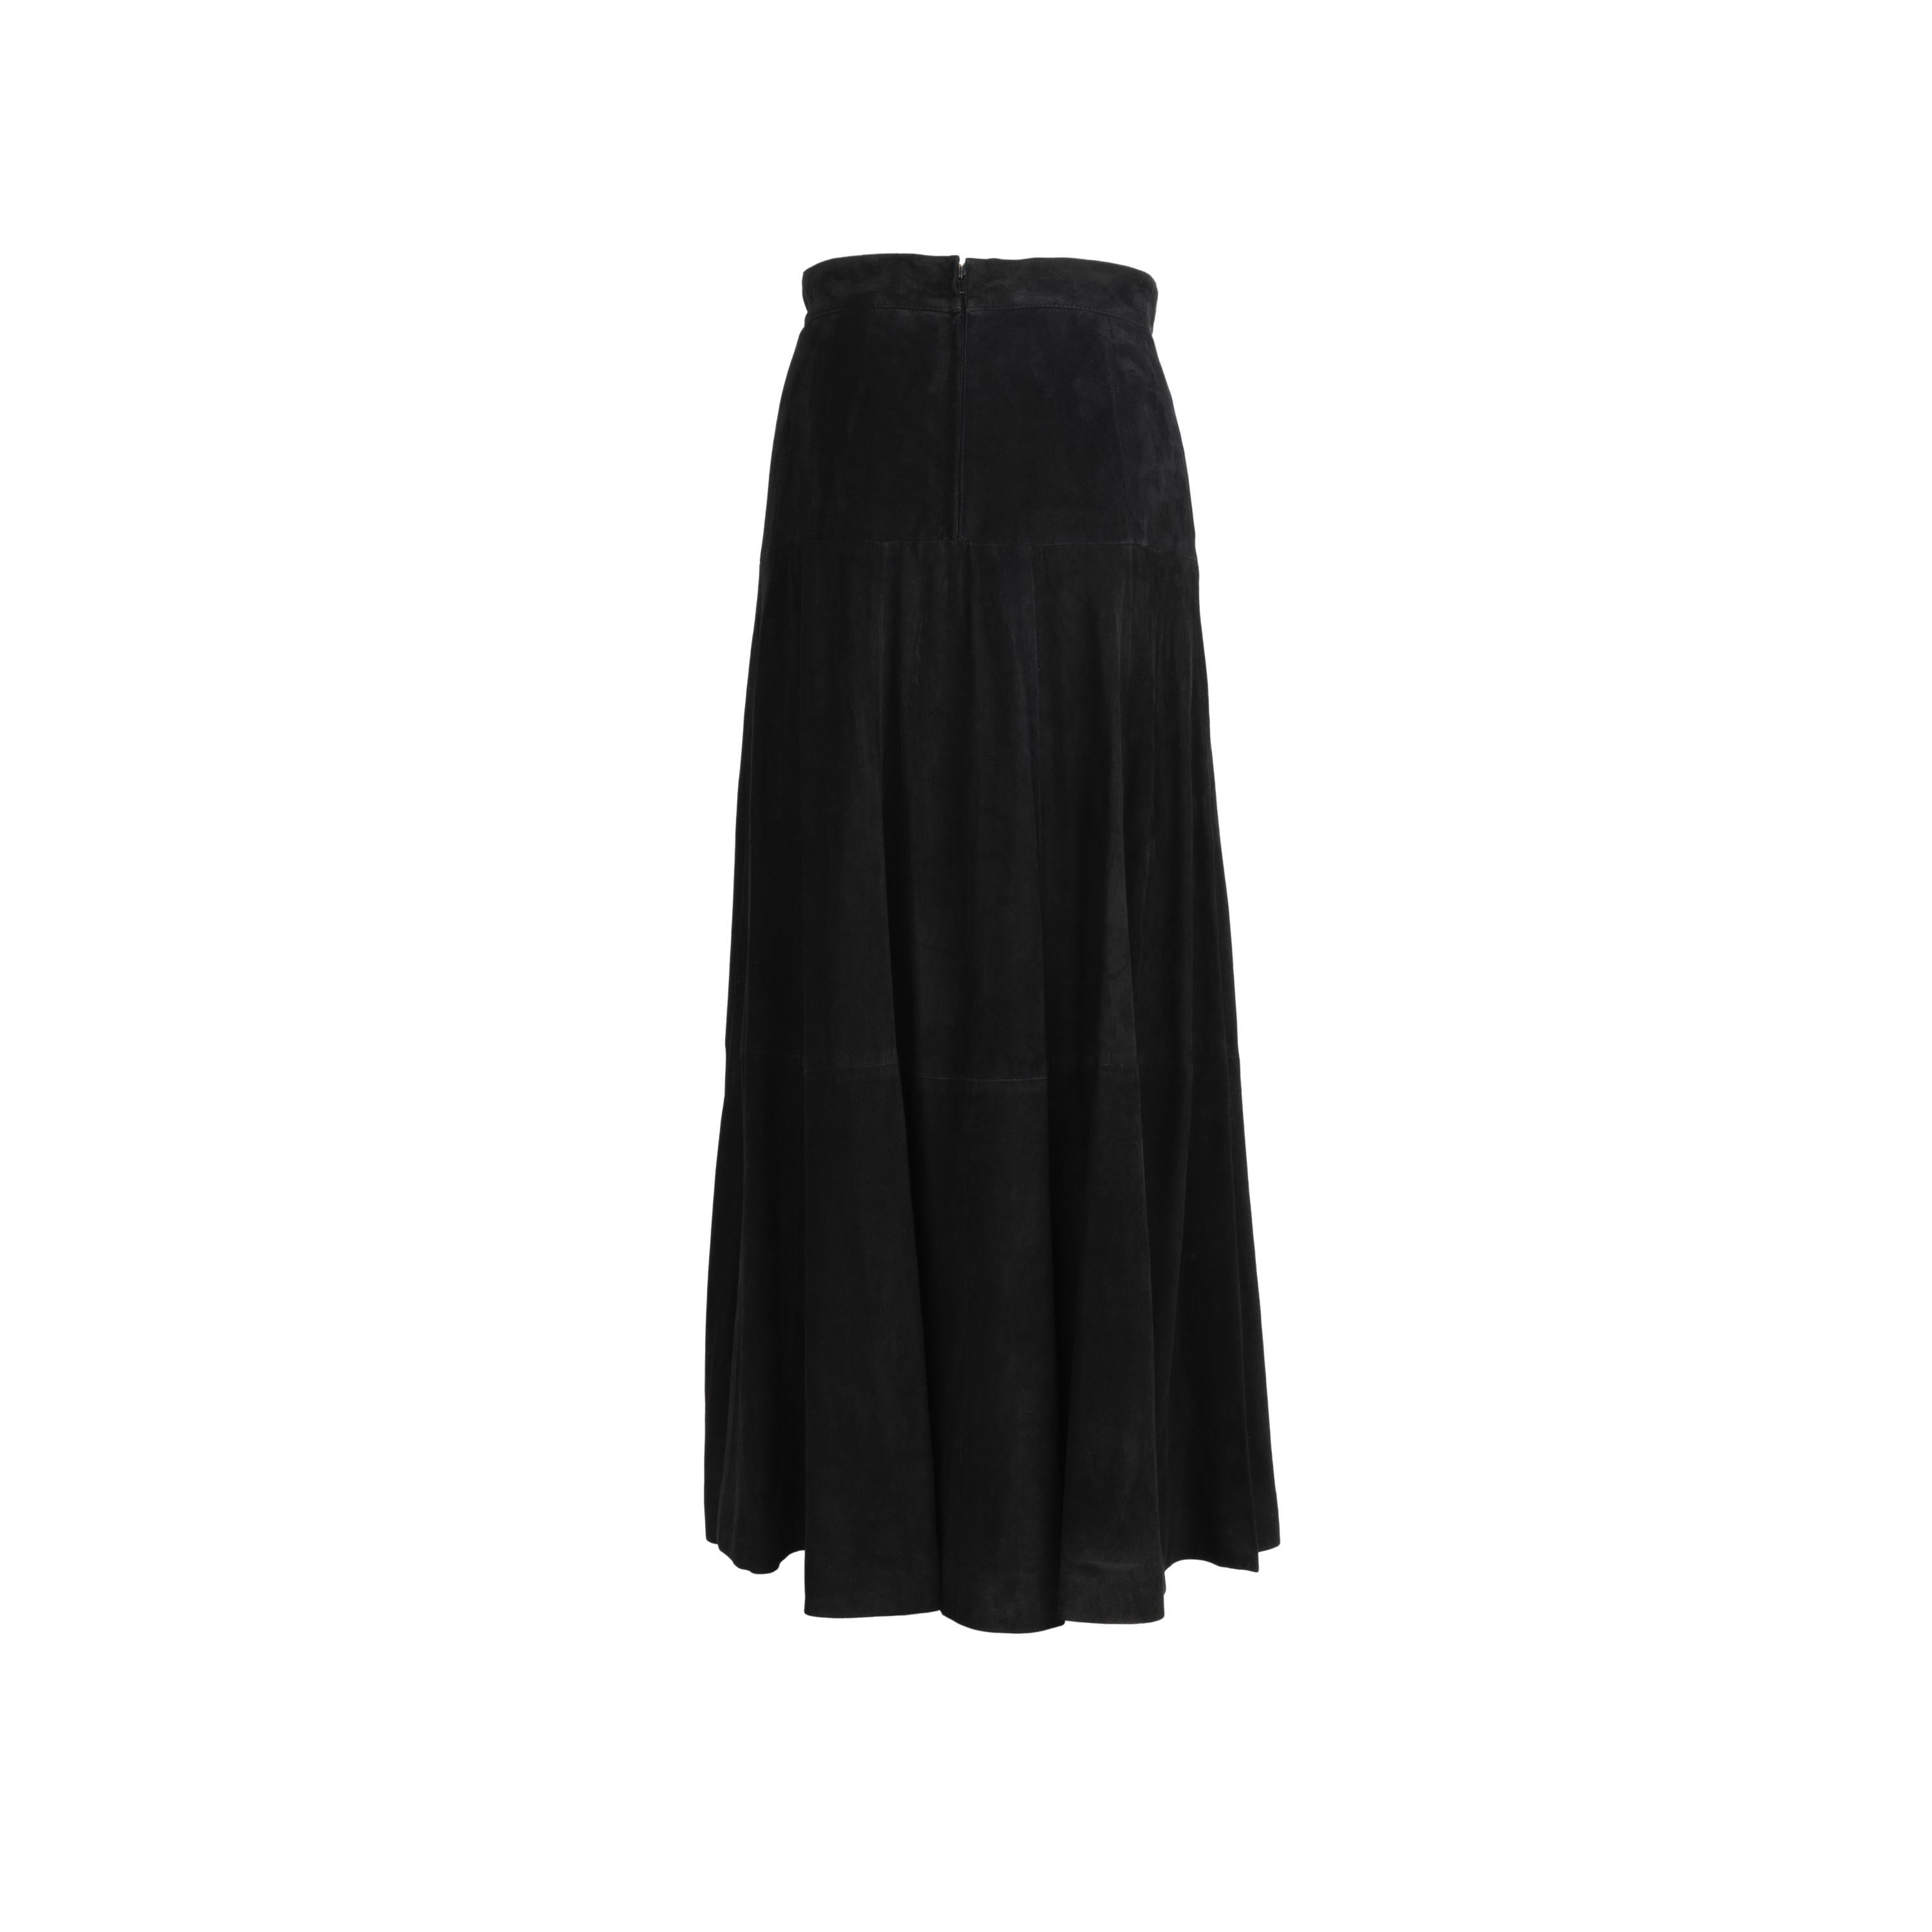 Gianfranco Ferré long black suede skirt.